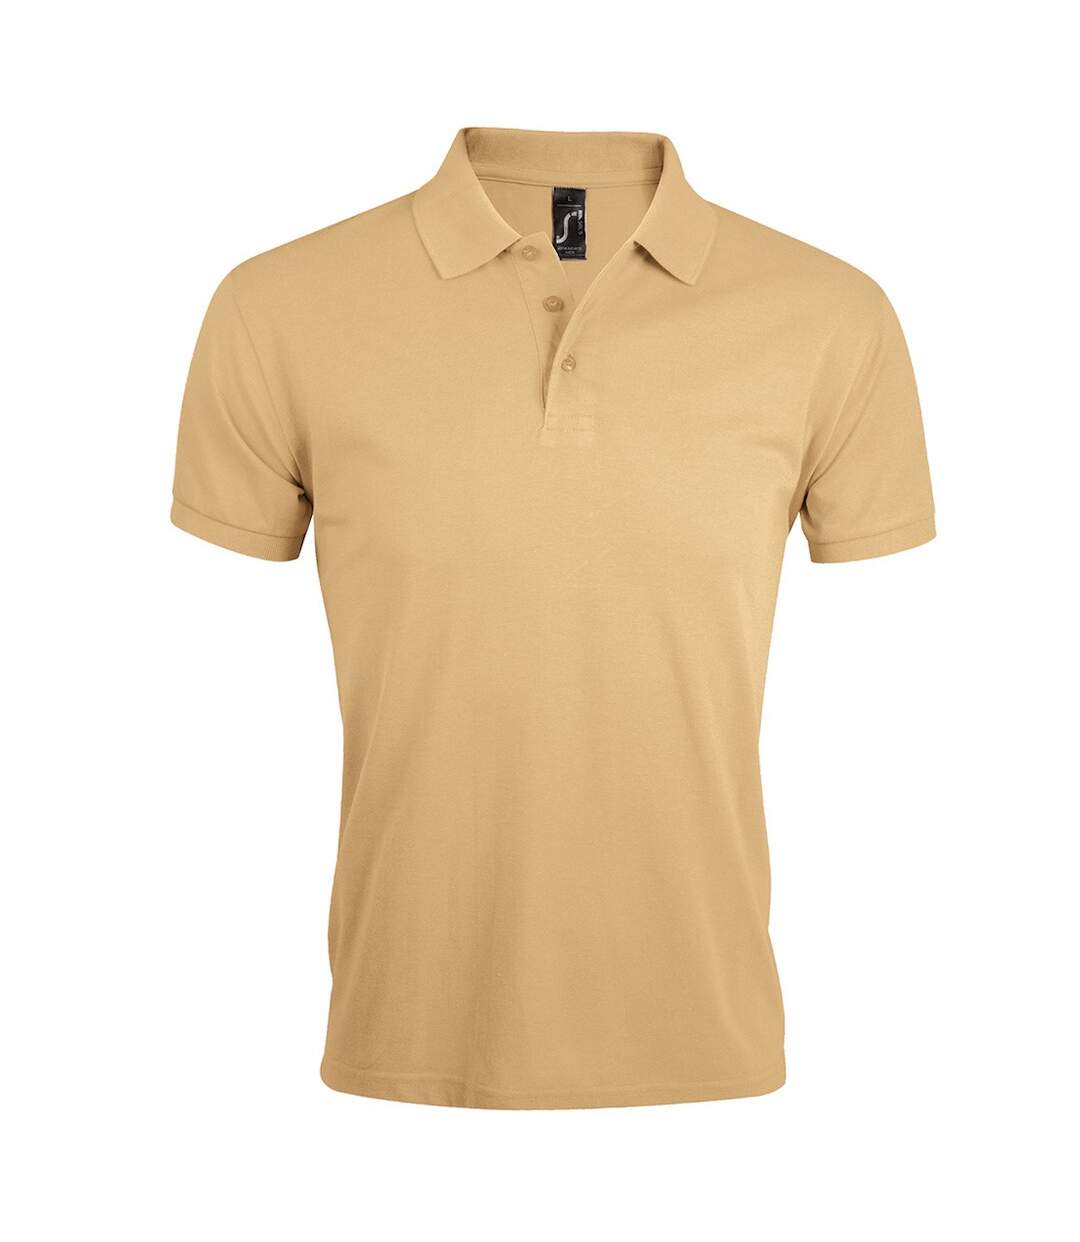 SOLs Mens Prime Pique Plain Short Sleeve Polo Shirt (Sand) - UTPC493